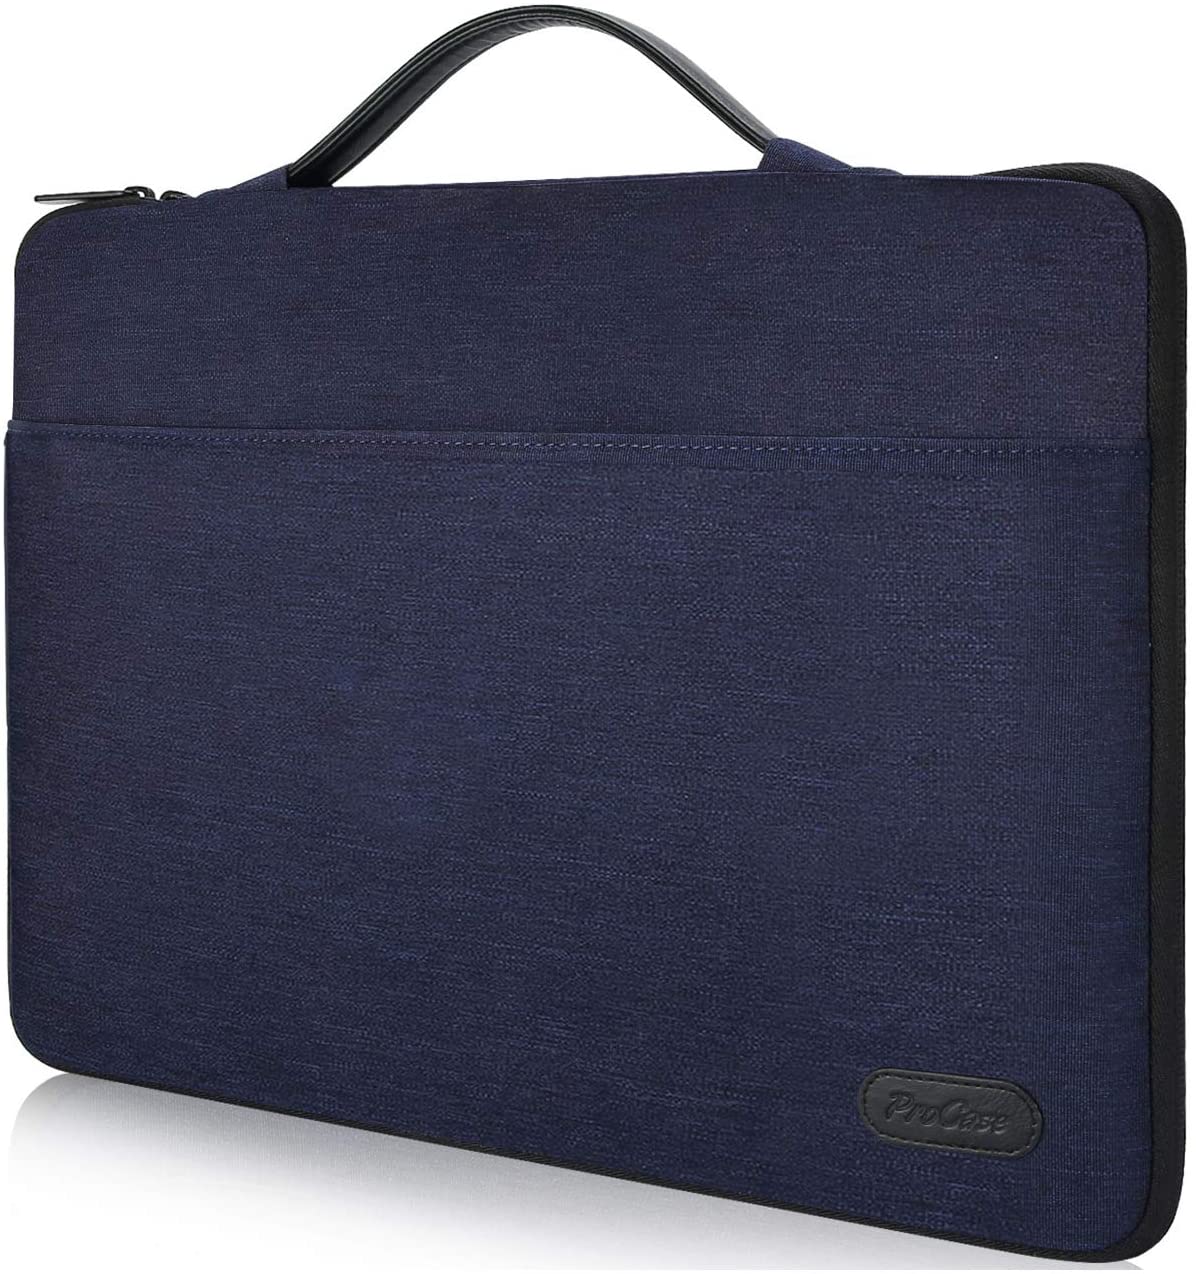 Laptop Sleeve Case Protective Carrying Bag | ProCase dark blue